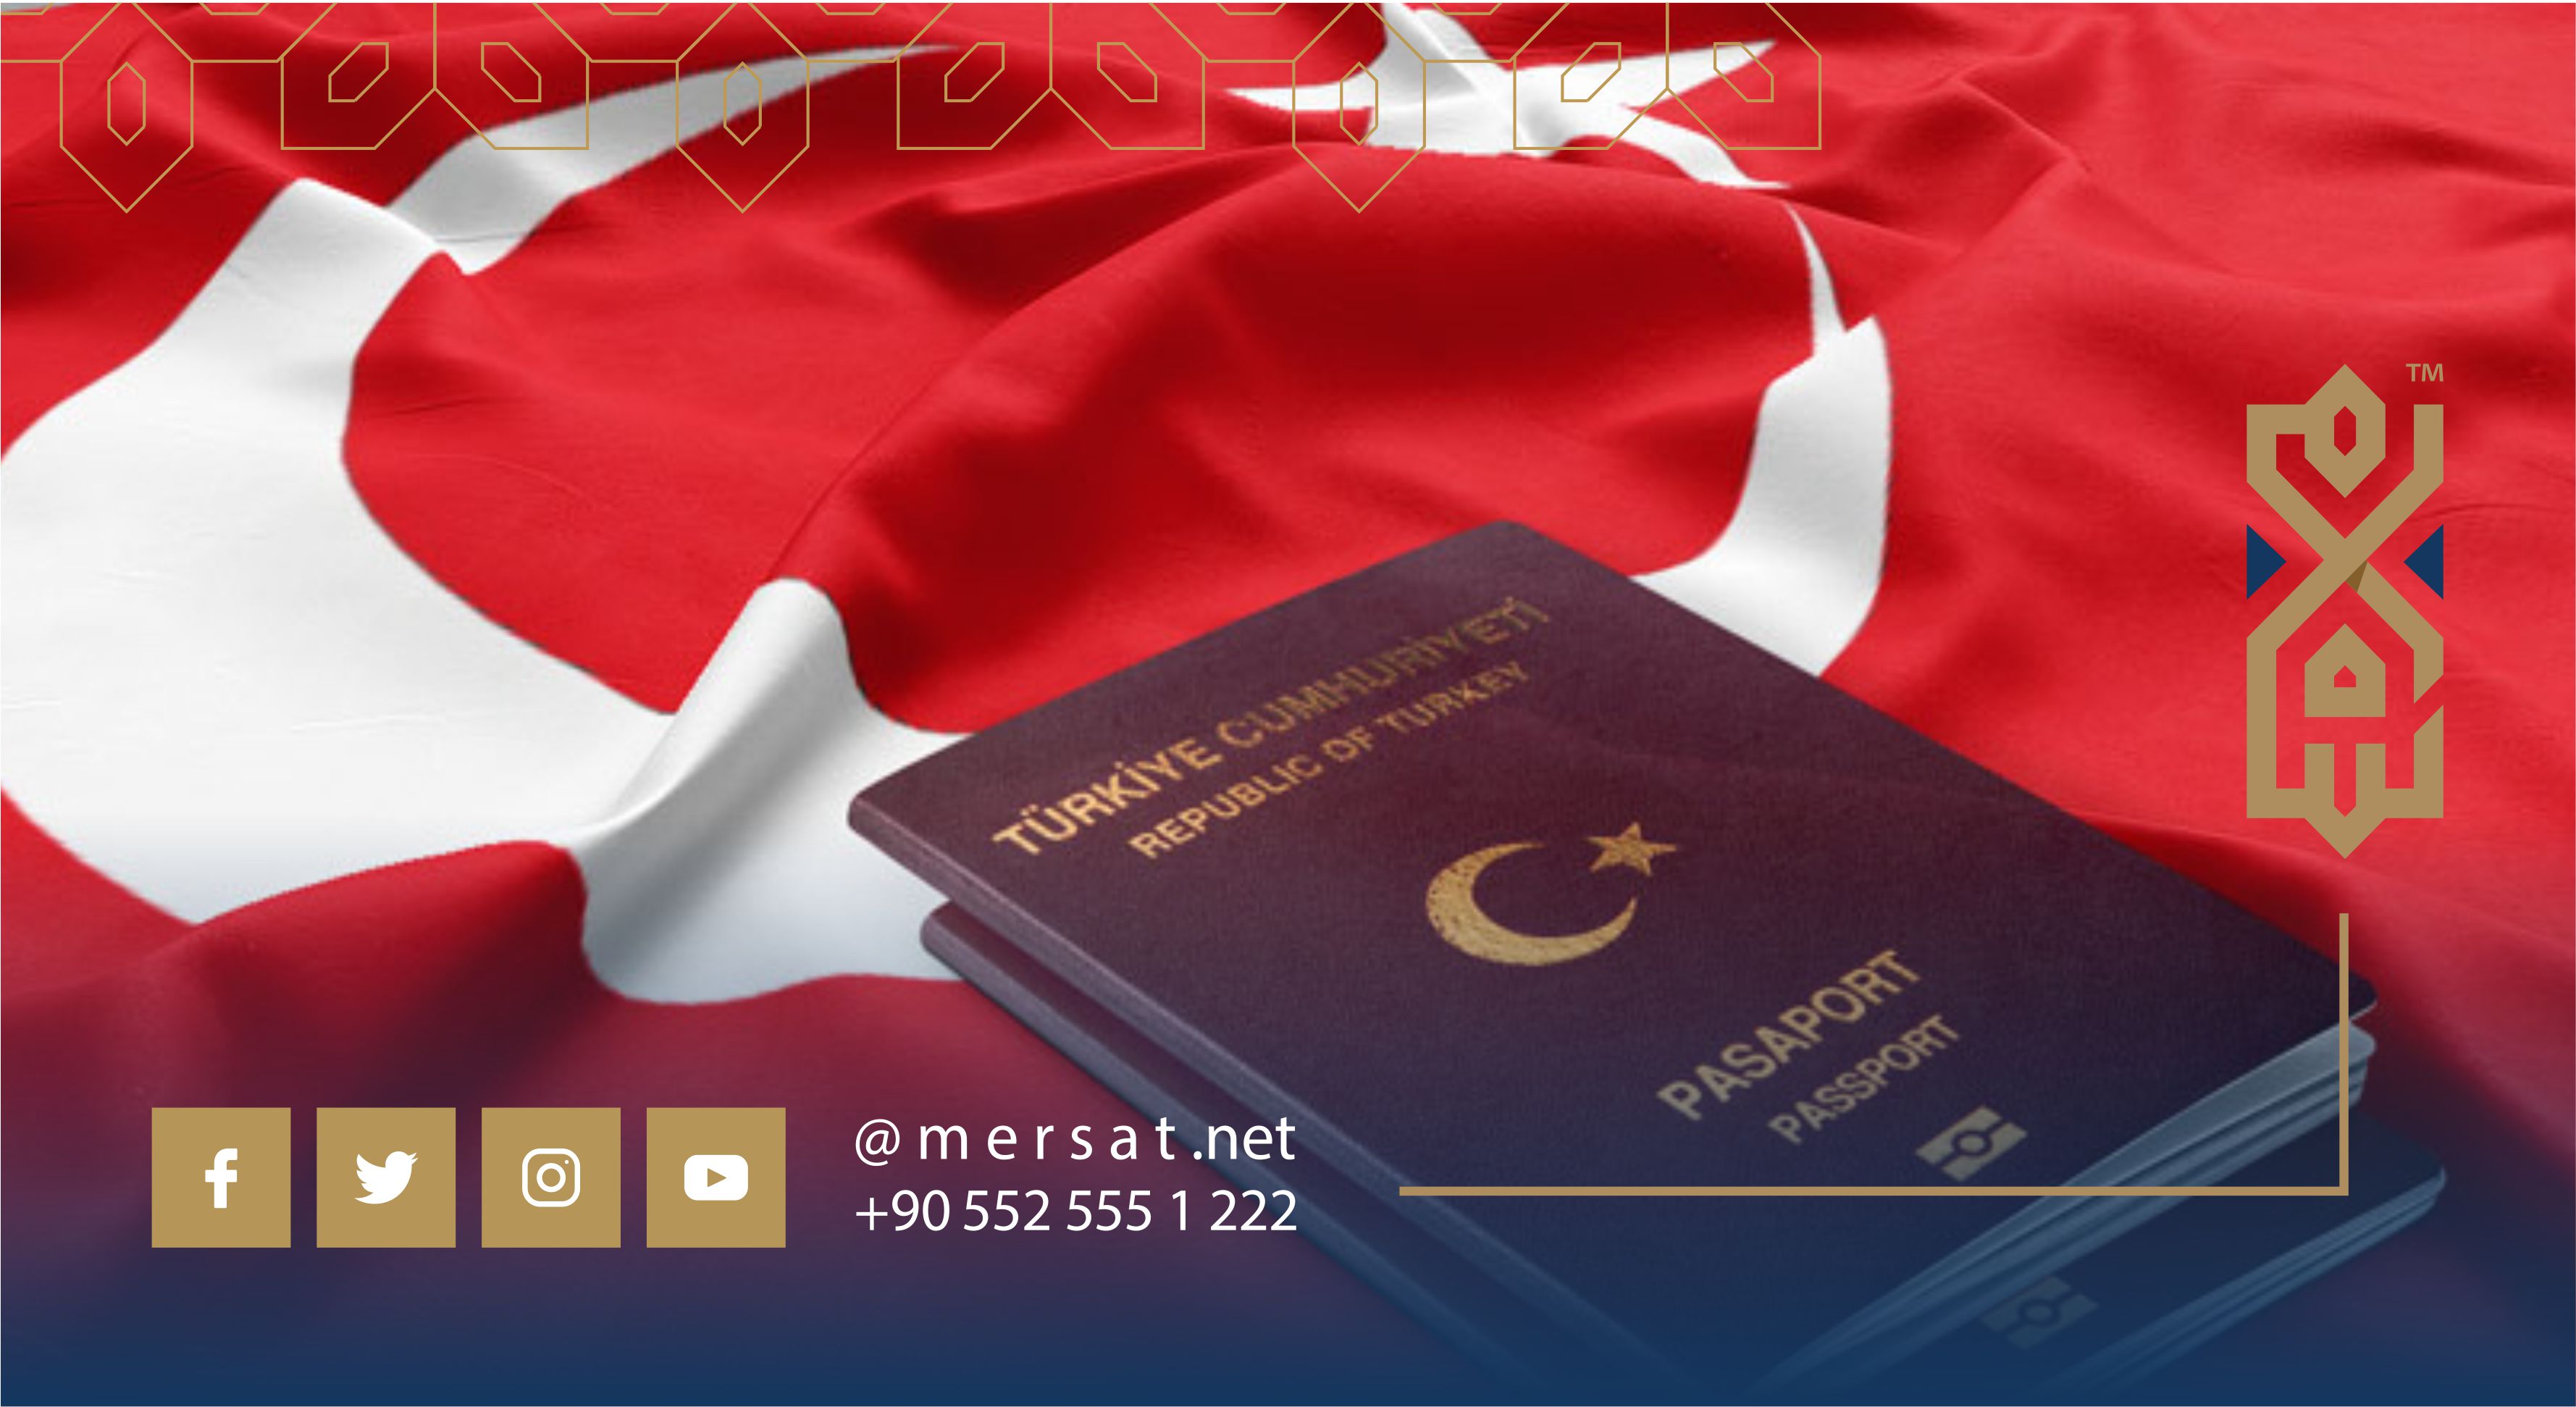 $ 400 thousand for Turkish citizenship